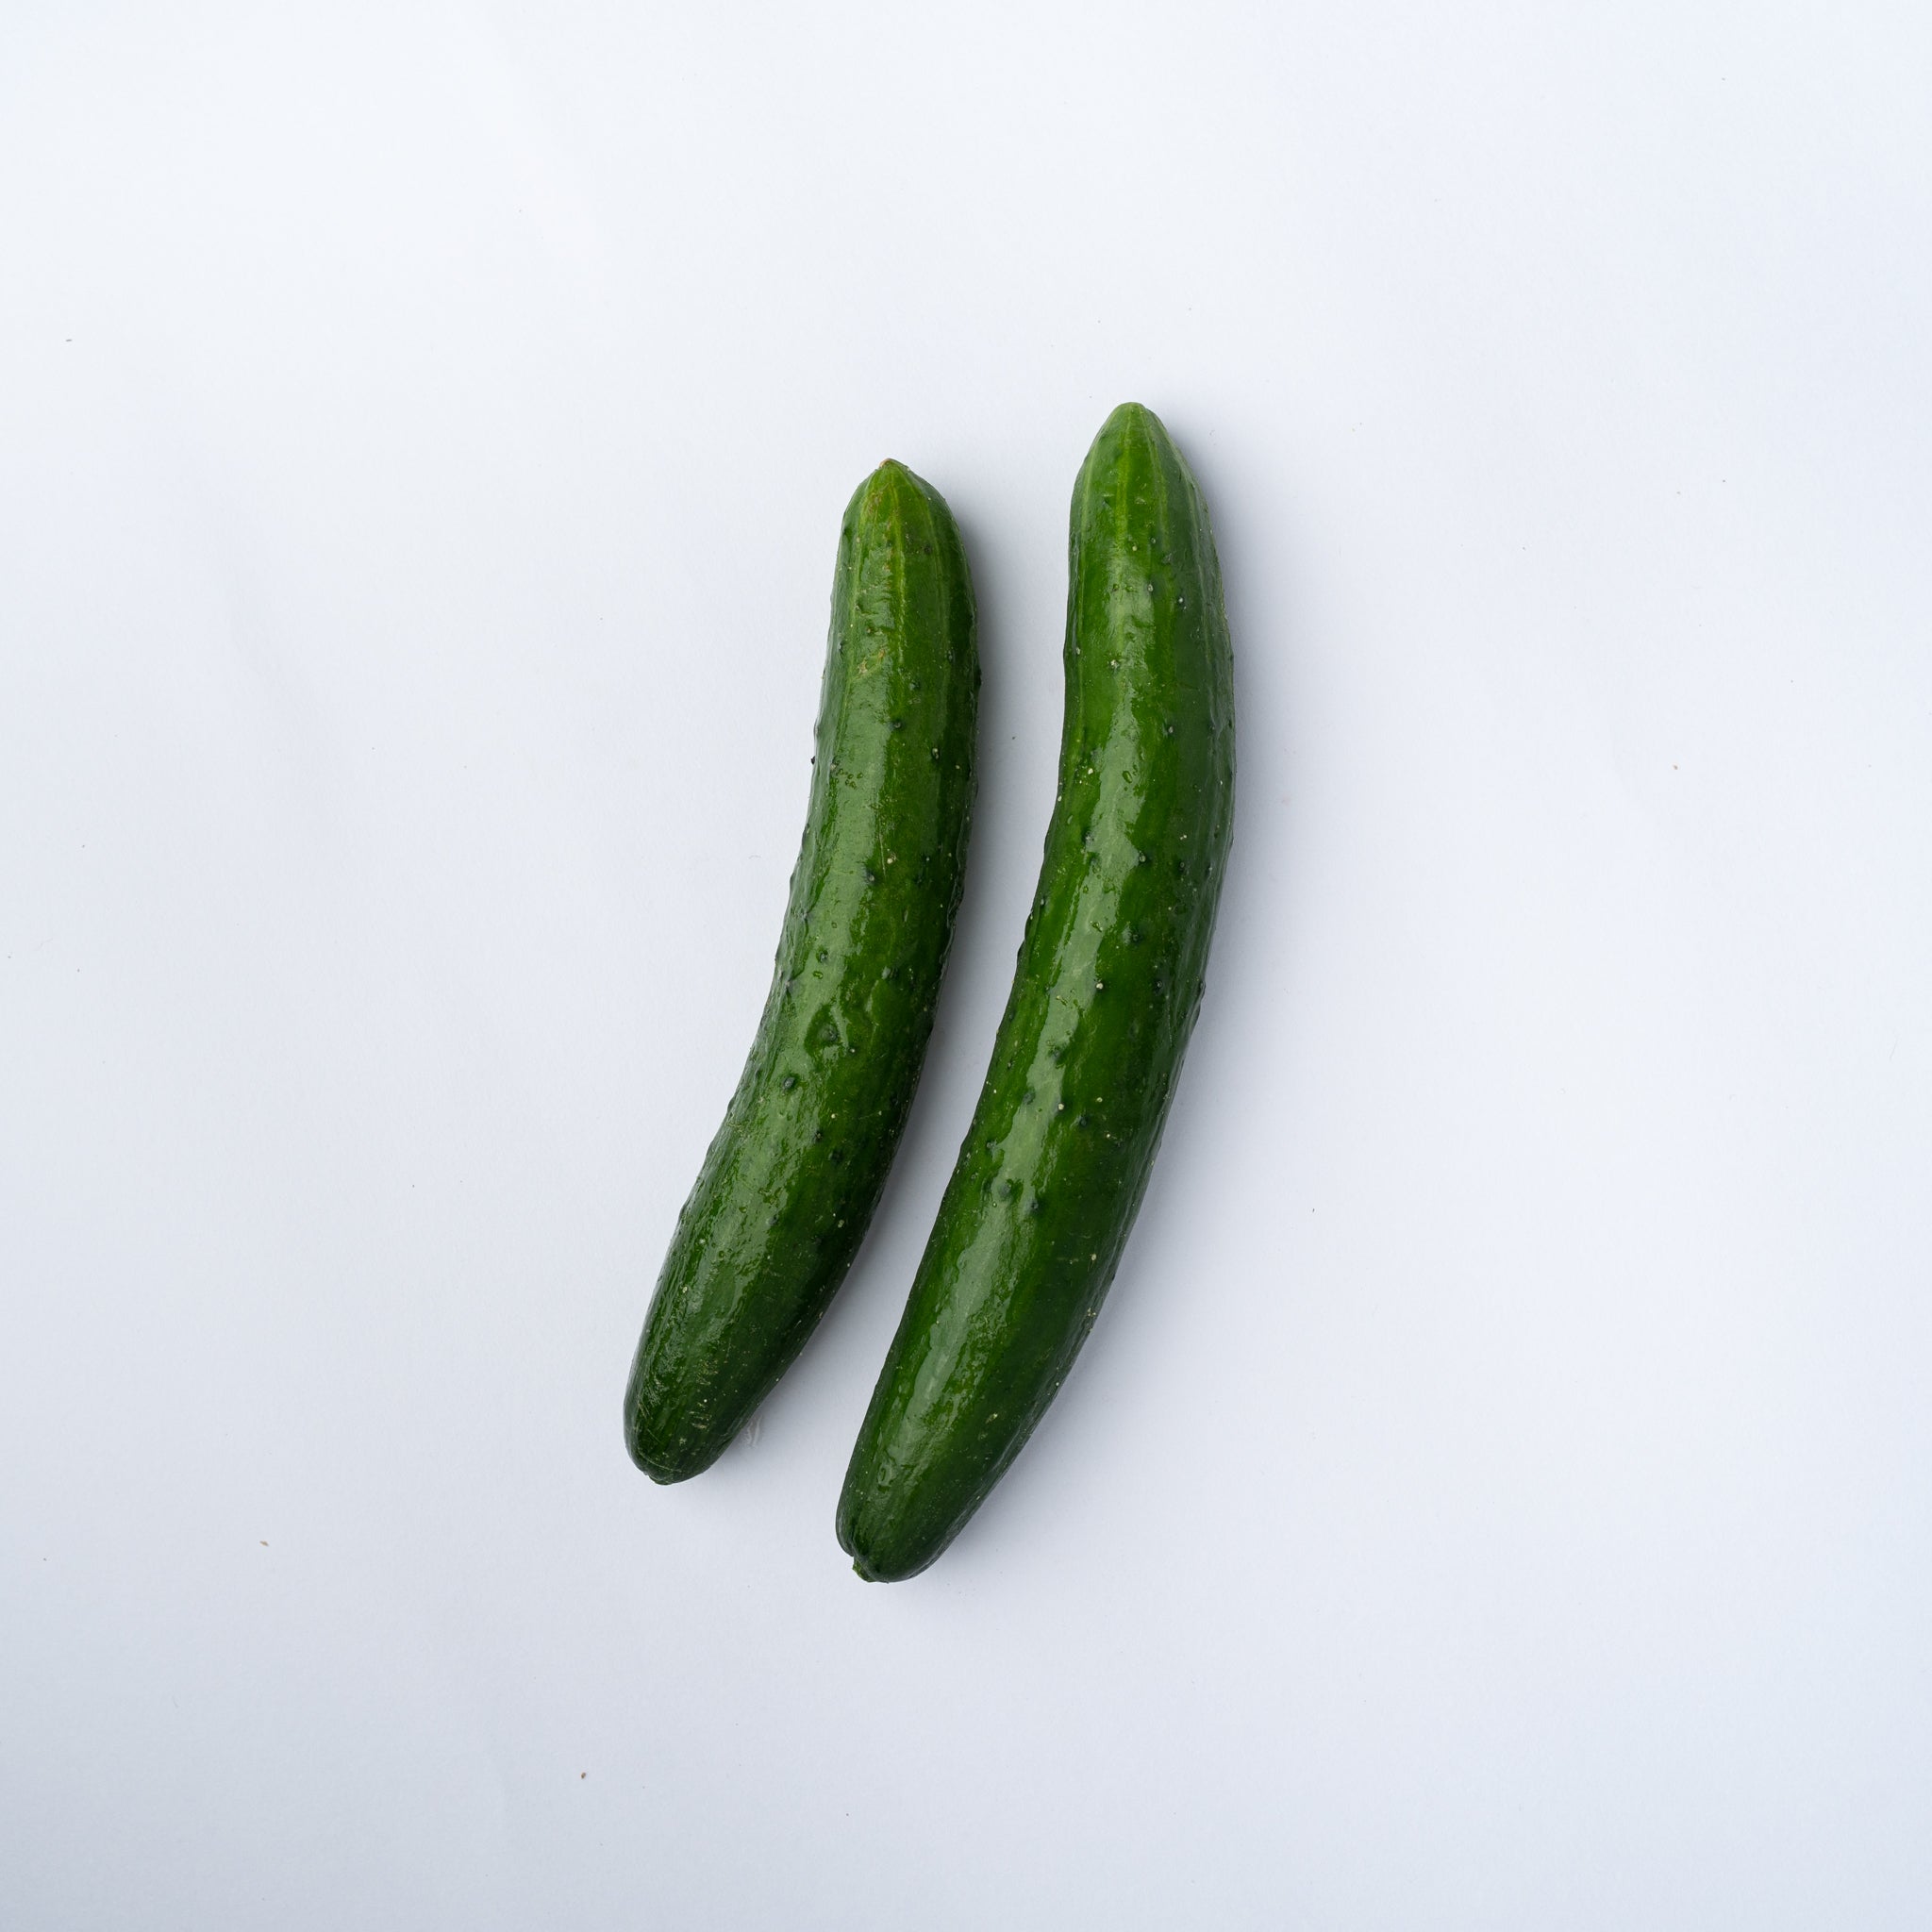 Two cucumebers